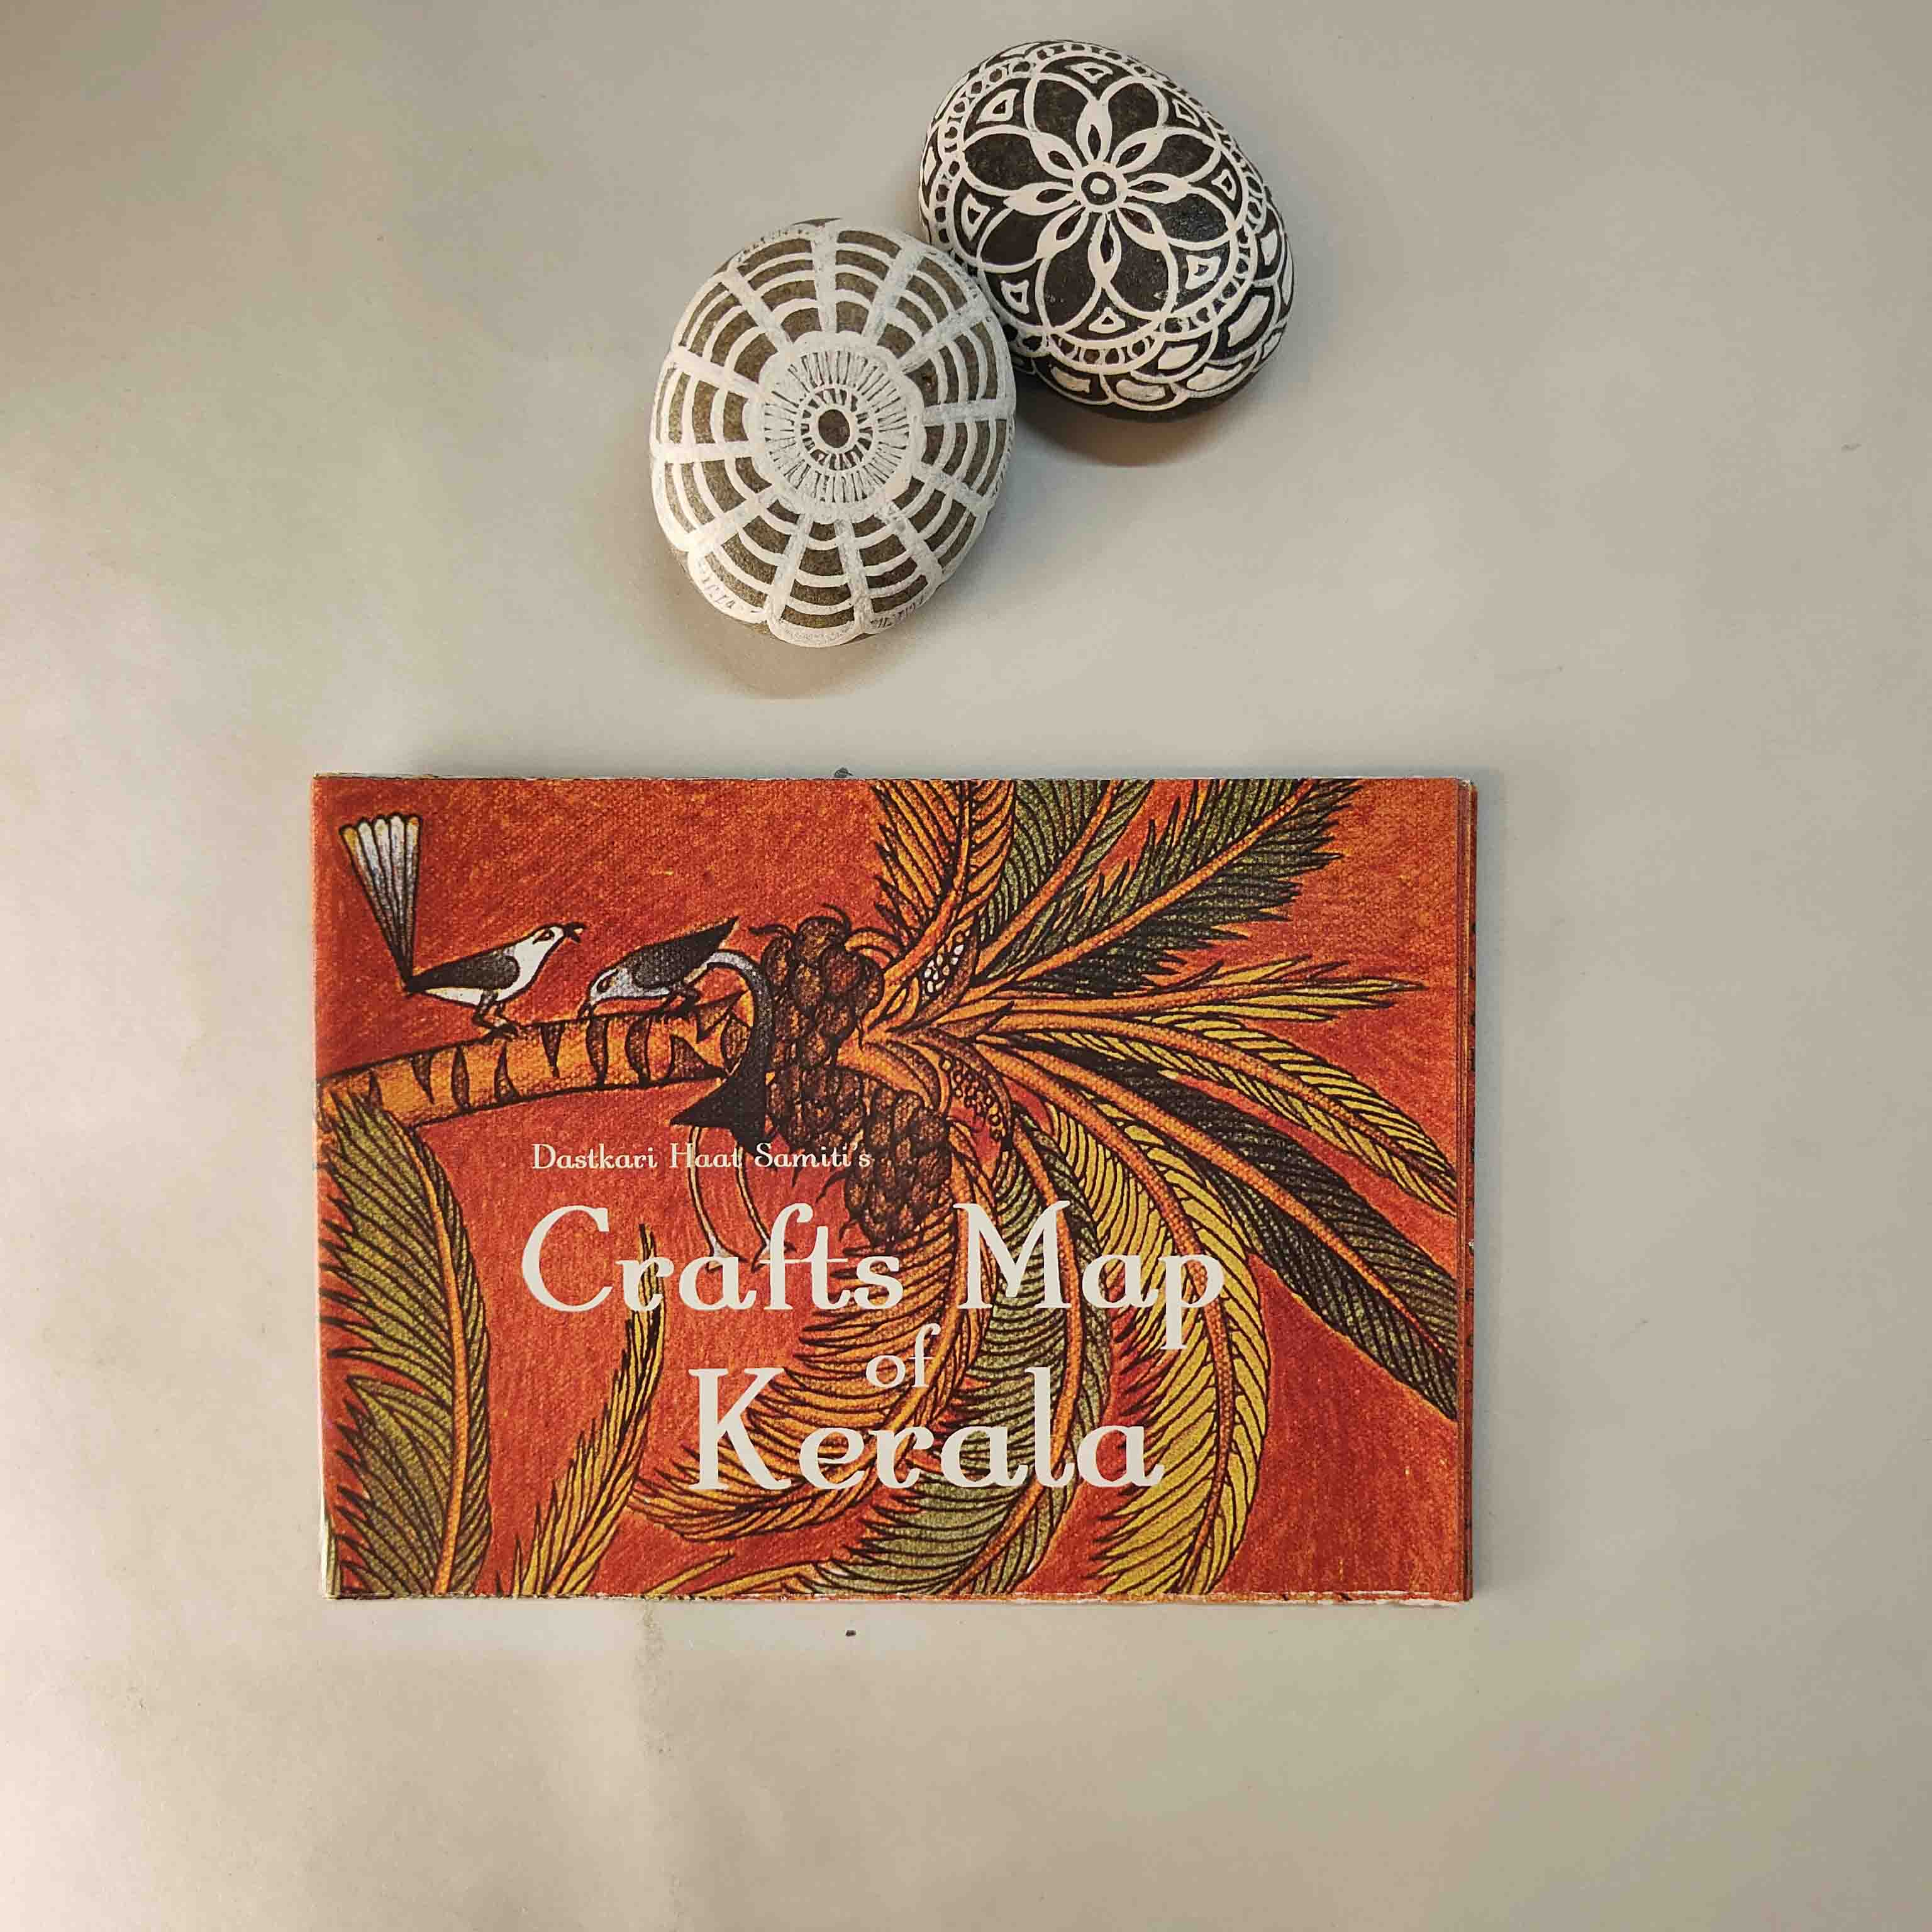 Crafts and Textiles map of Kerala by Dastkari Haat Samiti